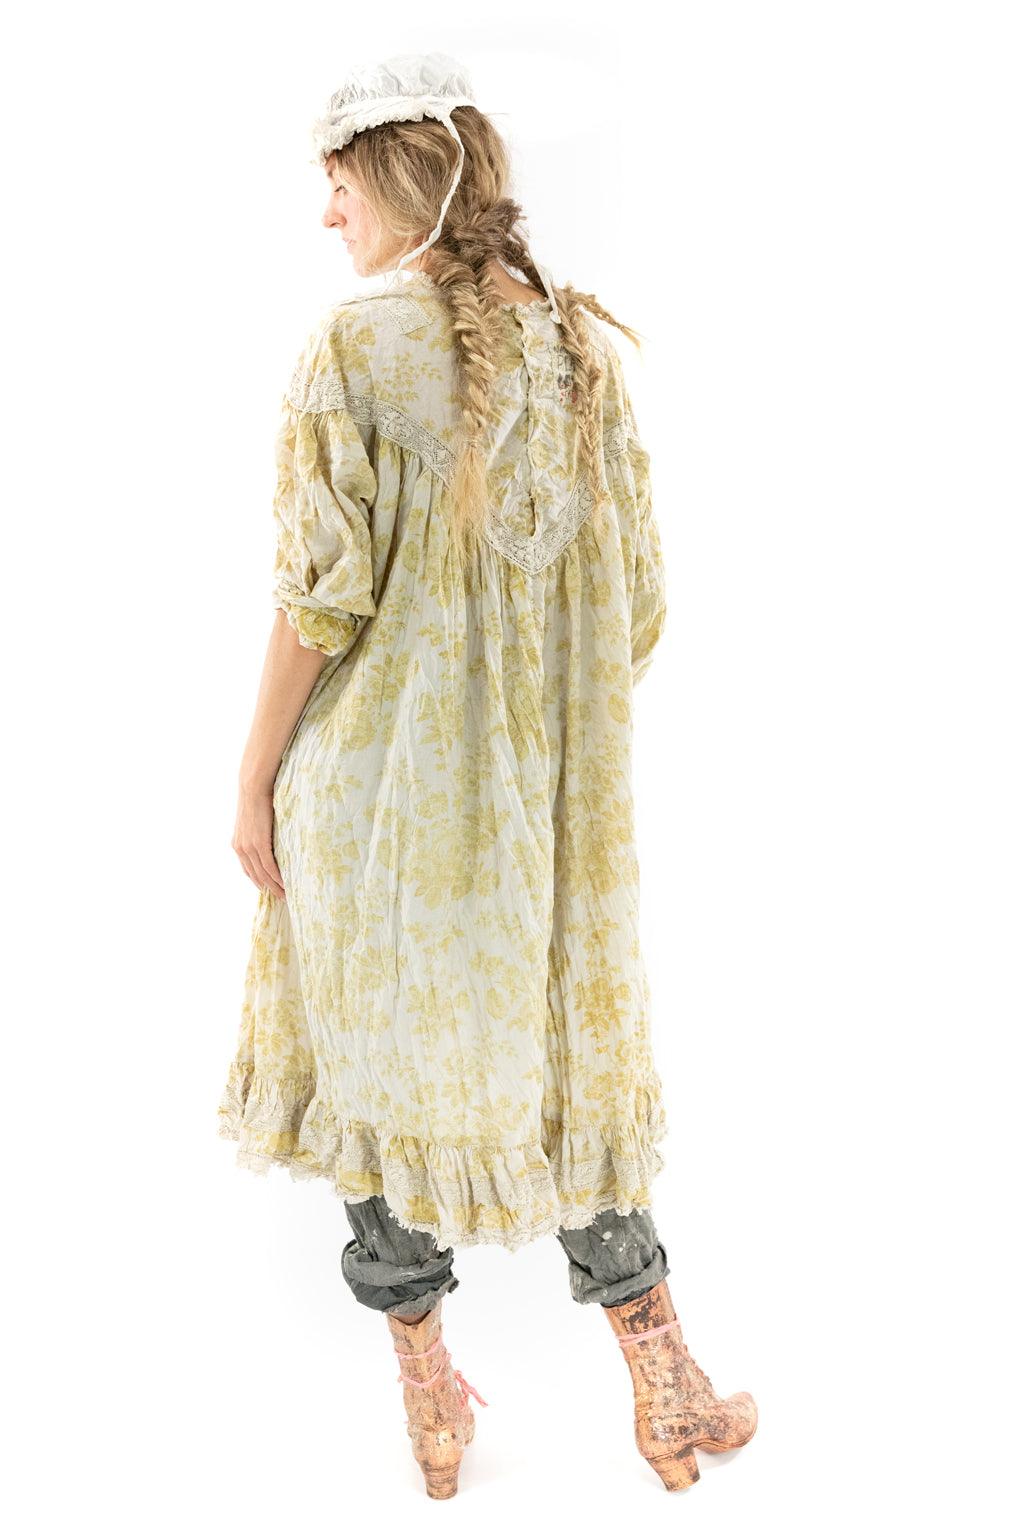 Iruka Dress - Magnolia Pearl Clothing